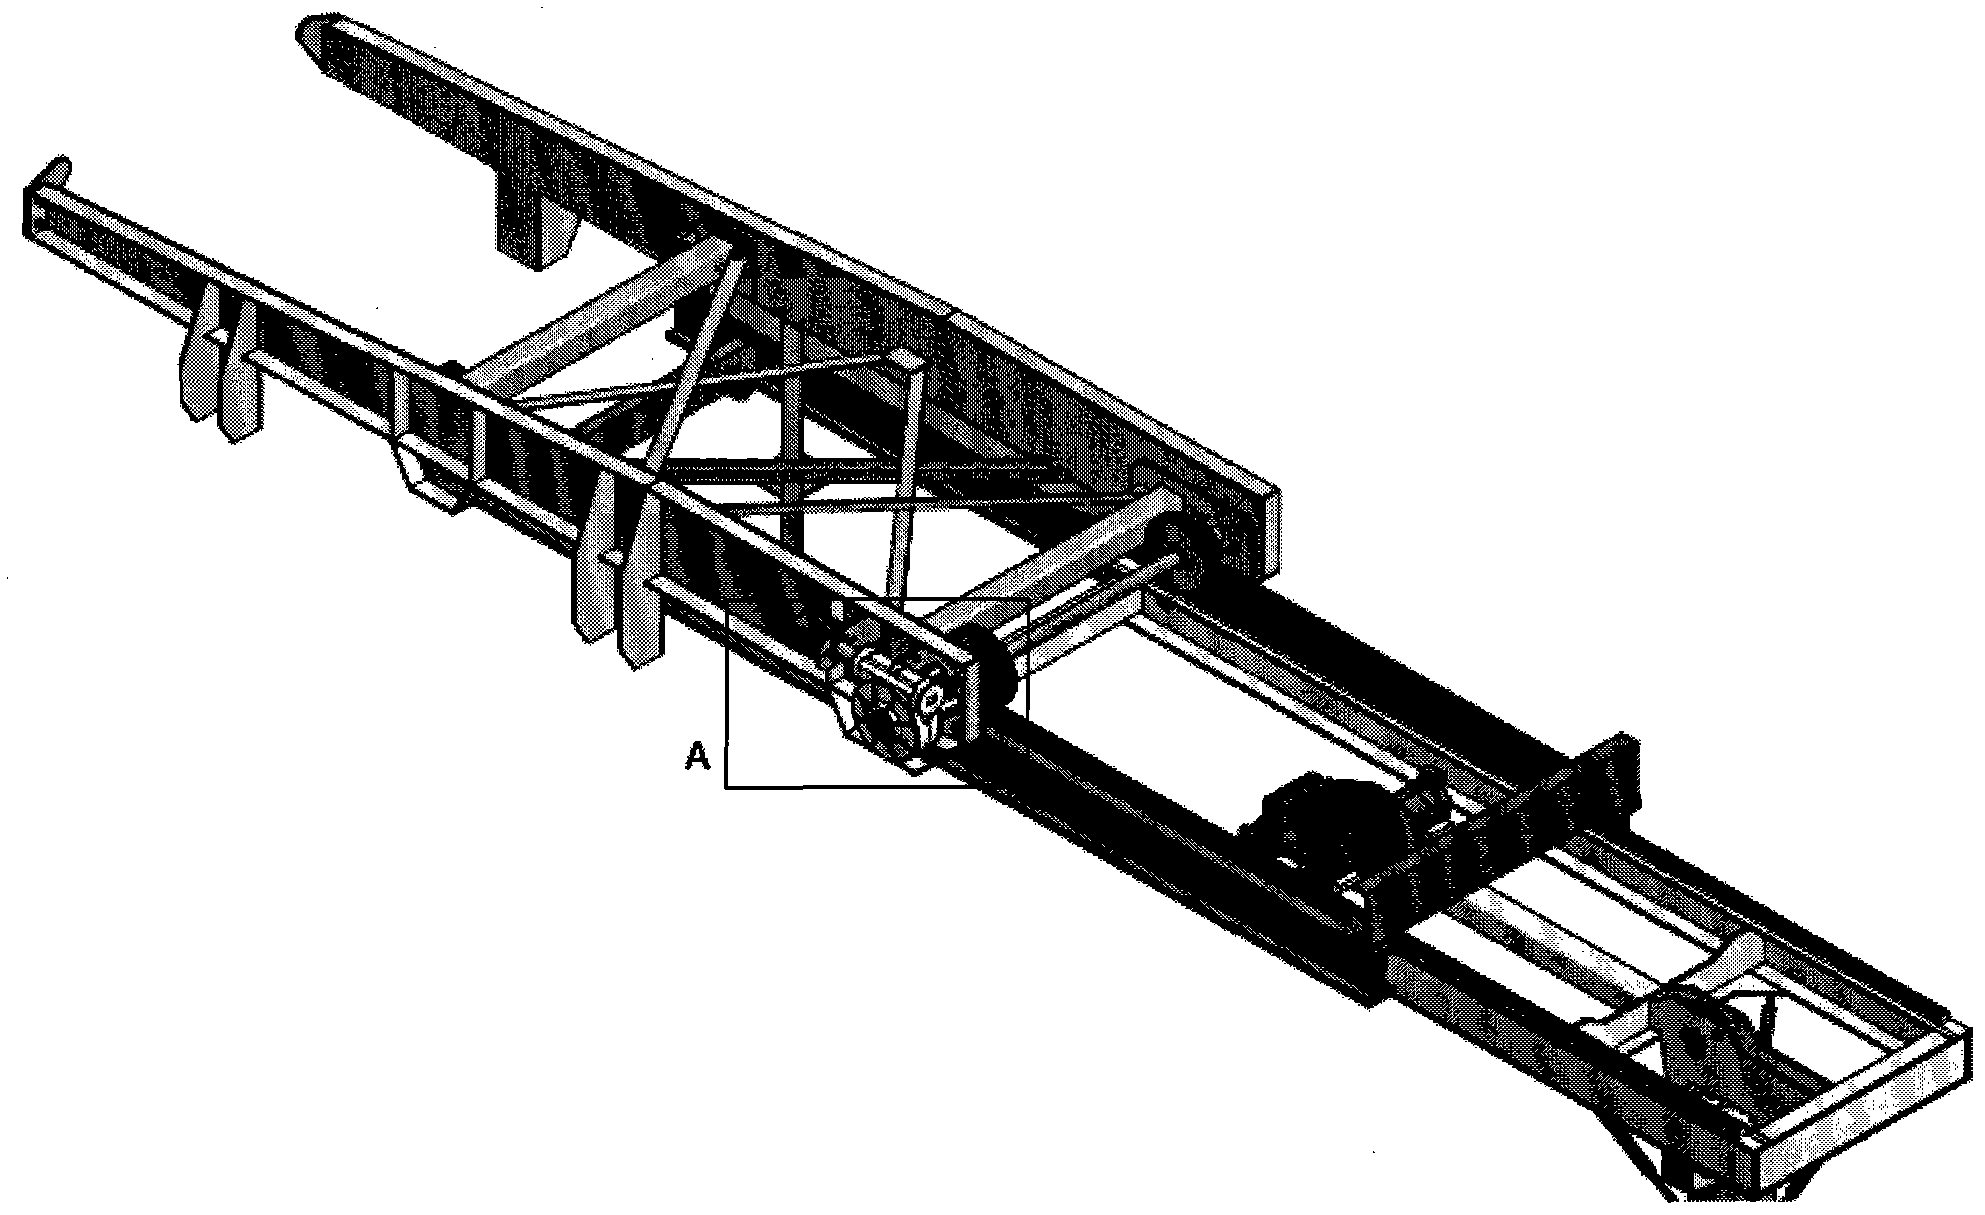 Horizontal telescopic suspension arm